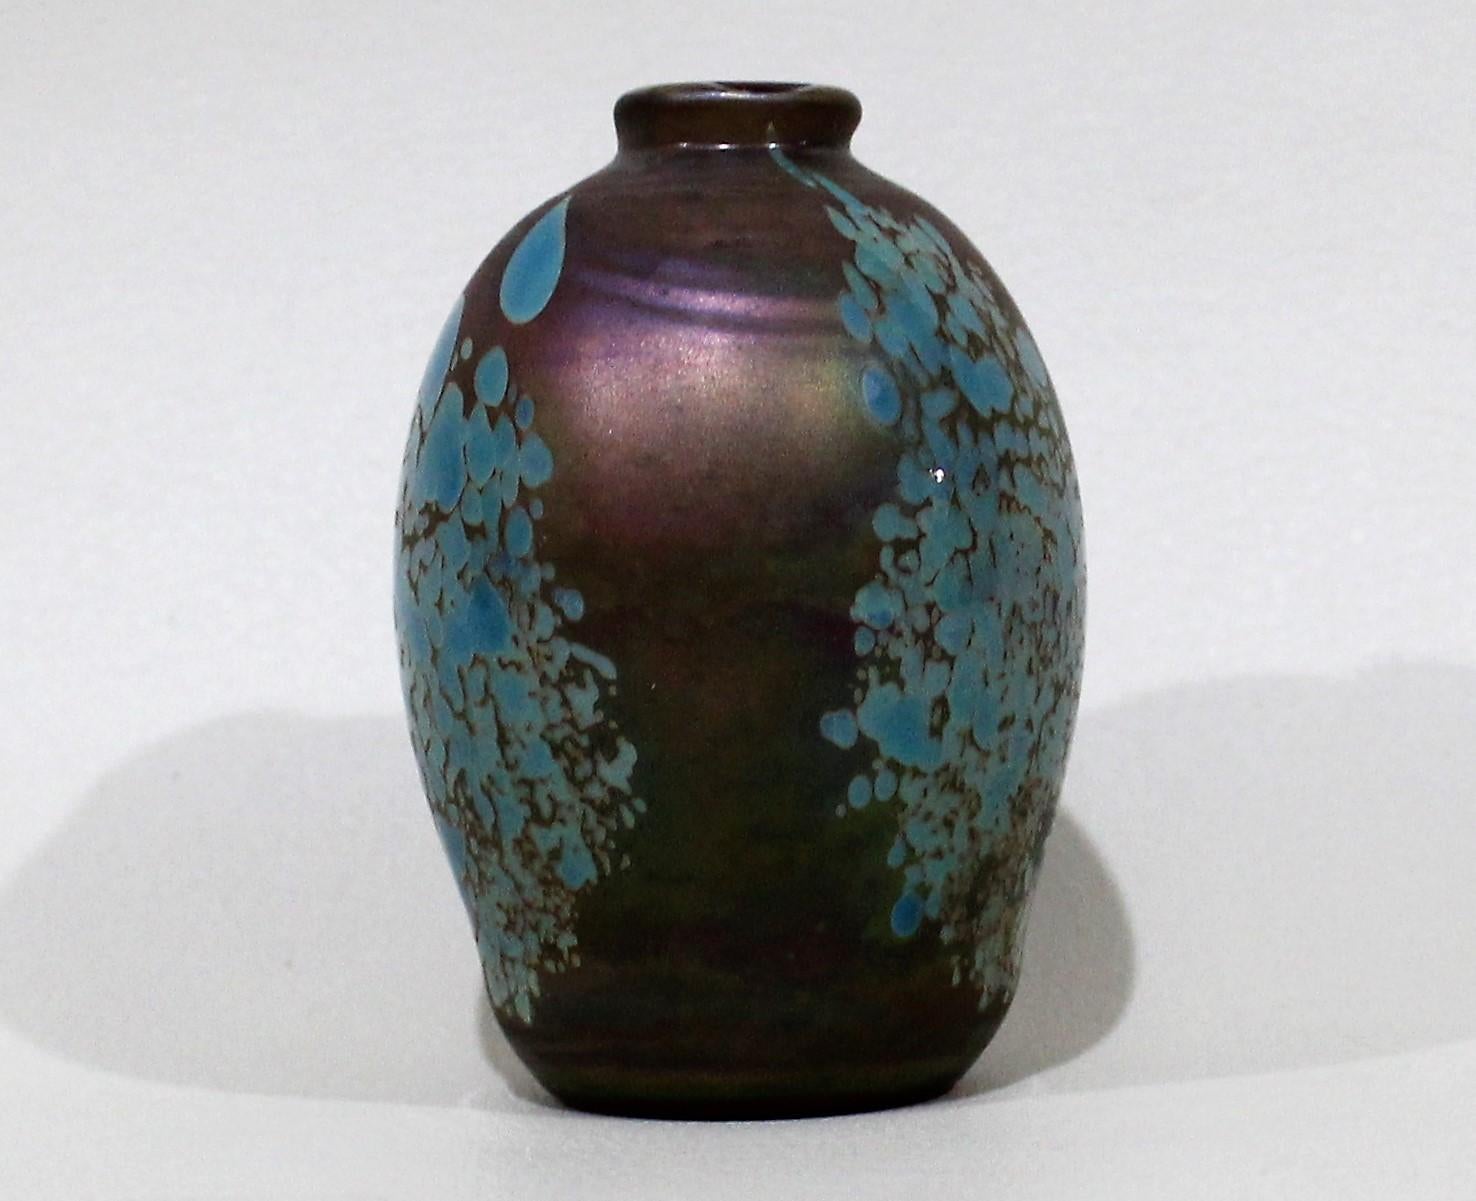 David Paterson art glass vase.